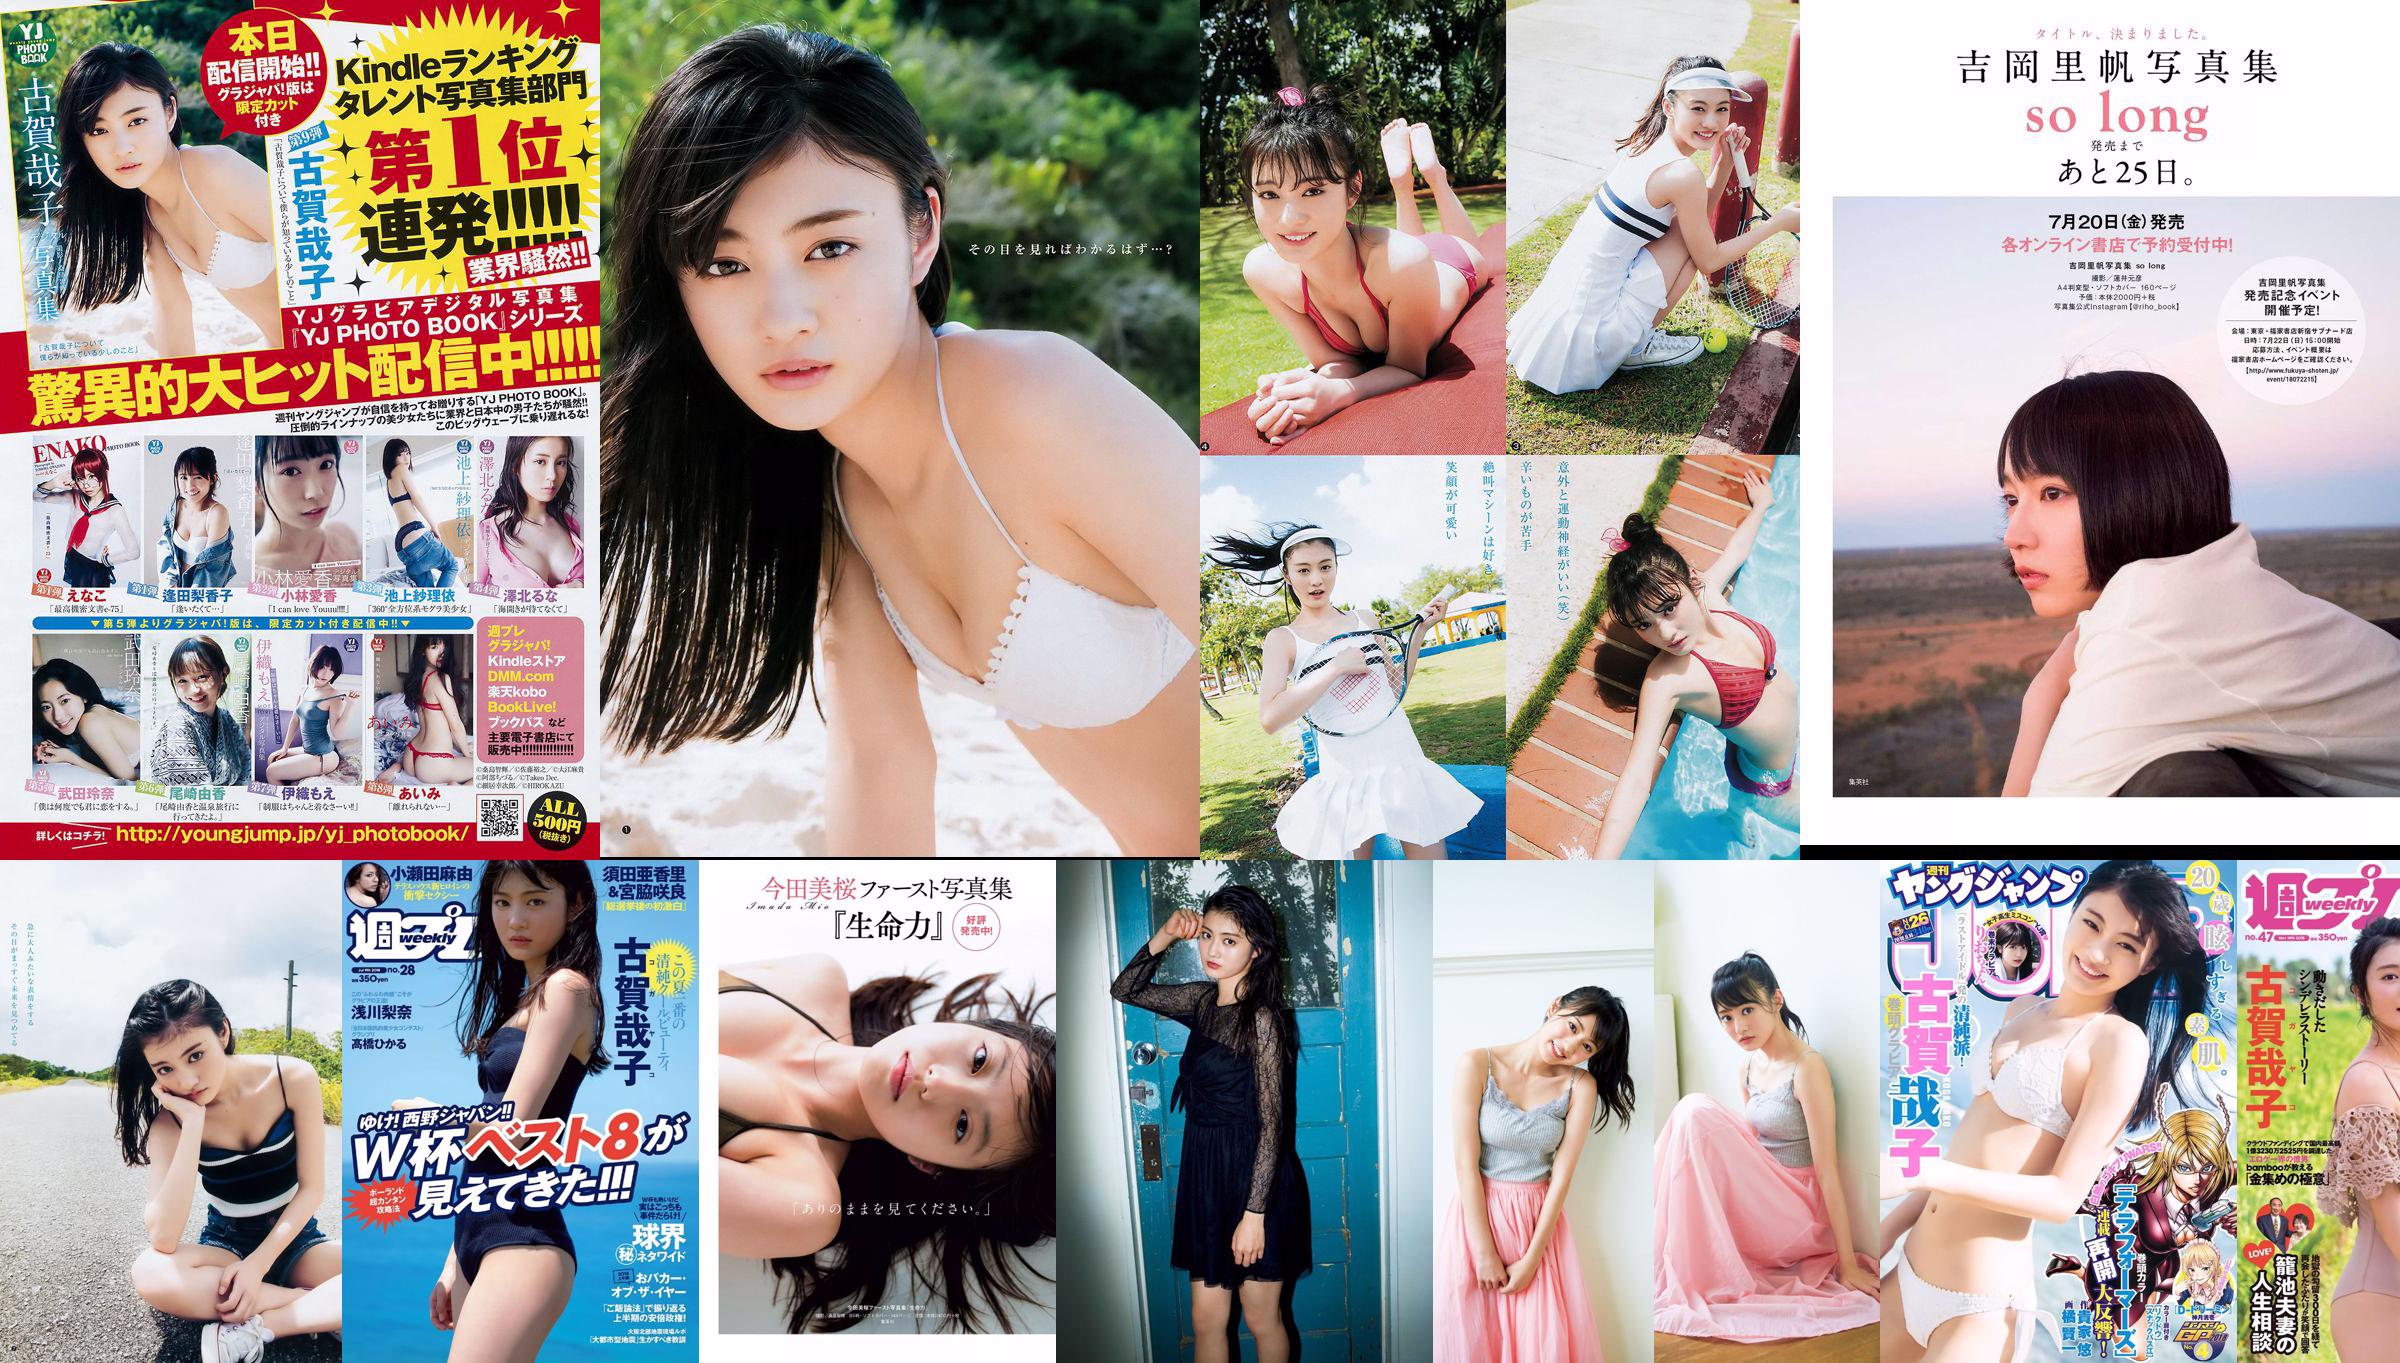 Йошико Кога Риочон [Weekly Young Jump] № 26 фото журнала в 2018 году No.fa633a Страница 2